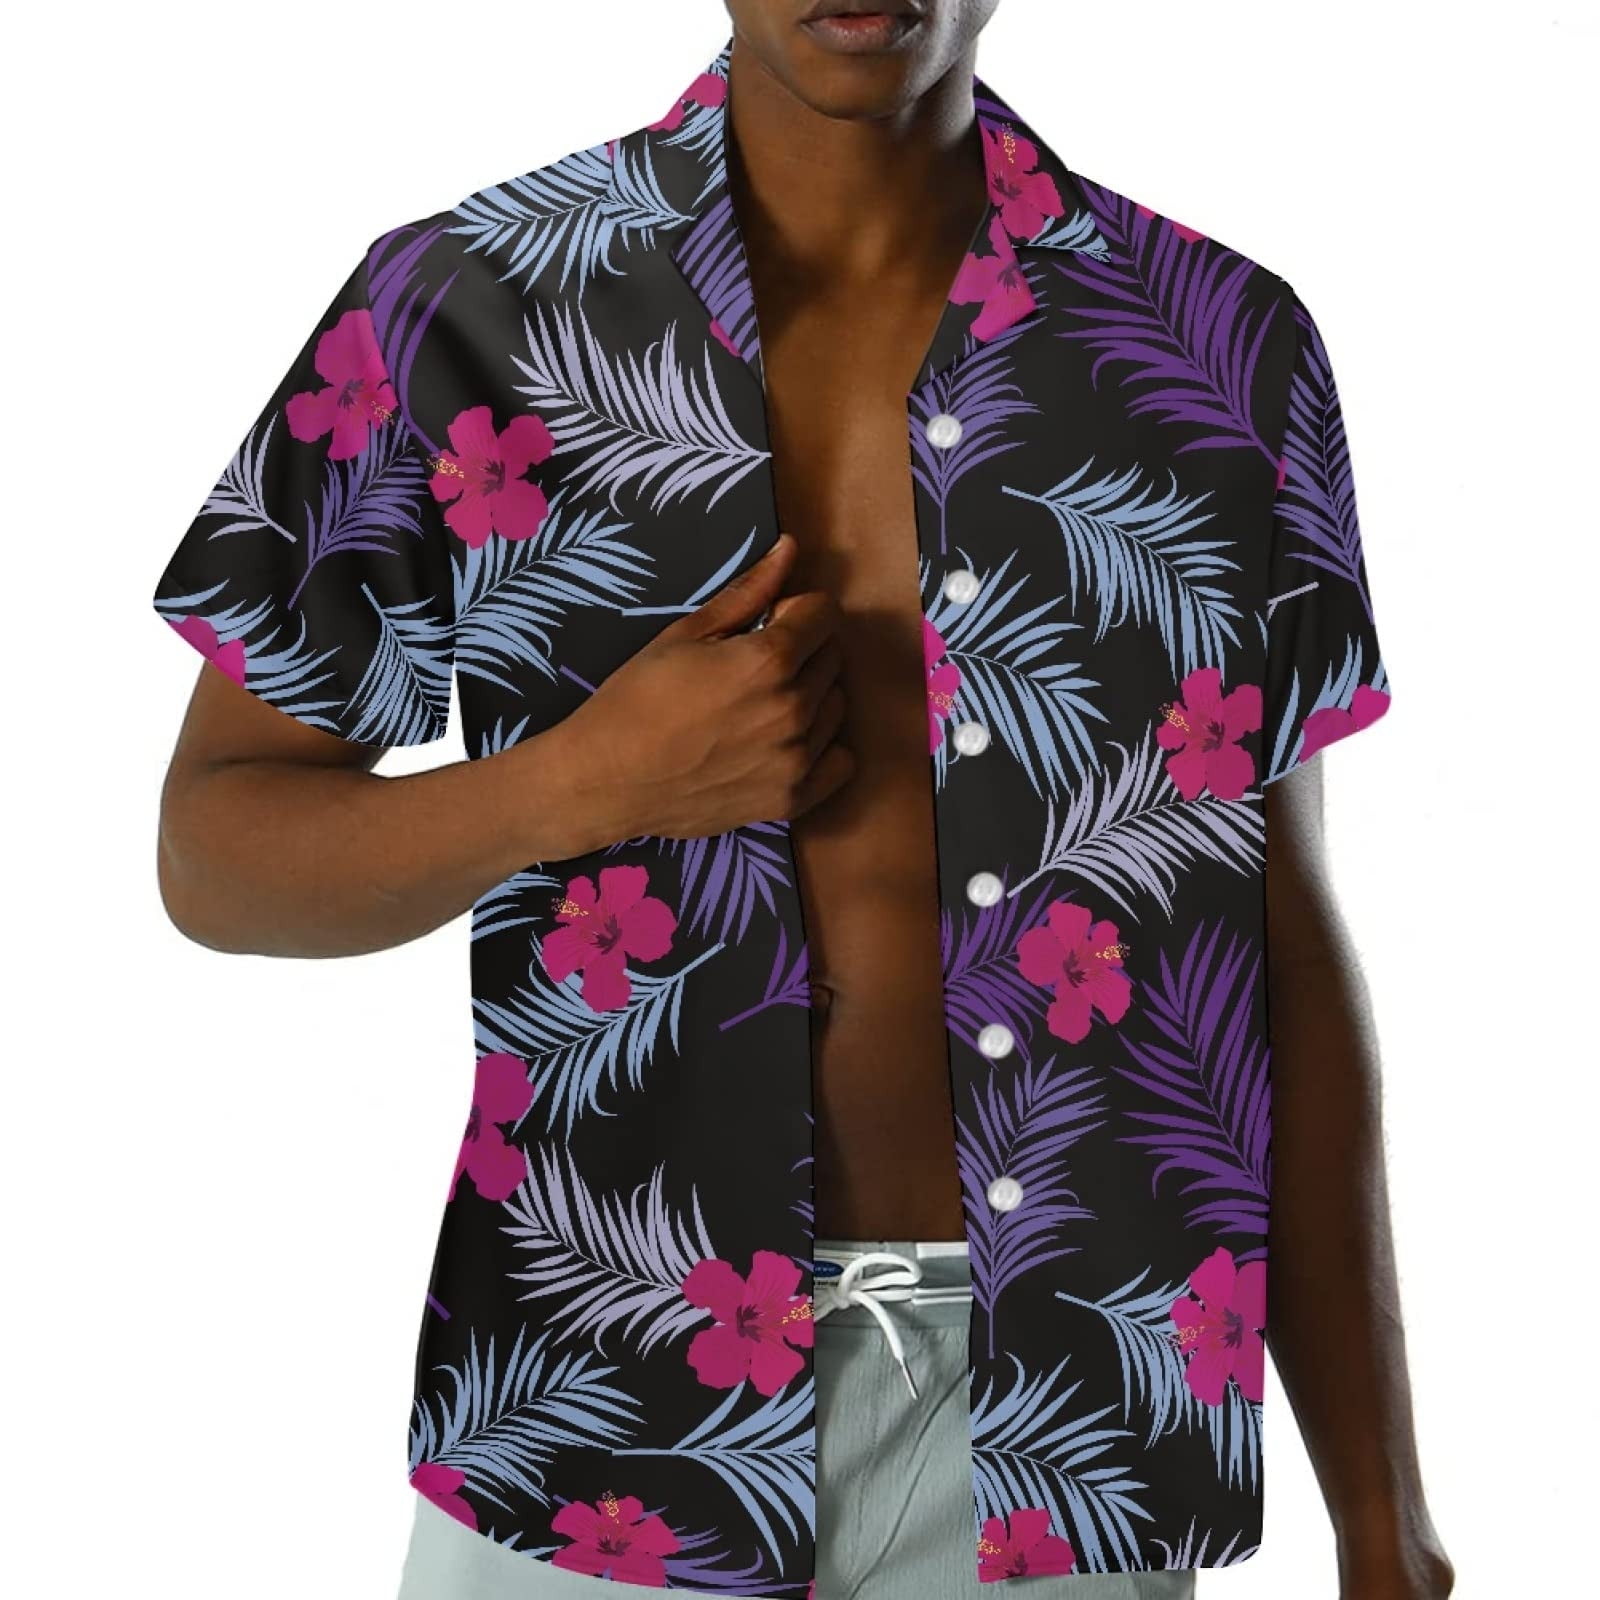 UDAXB Men's Short Sleeve Hawaiian Shirt Tropical Print Casual